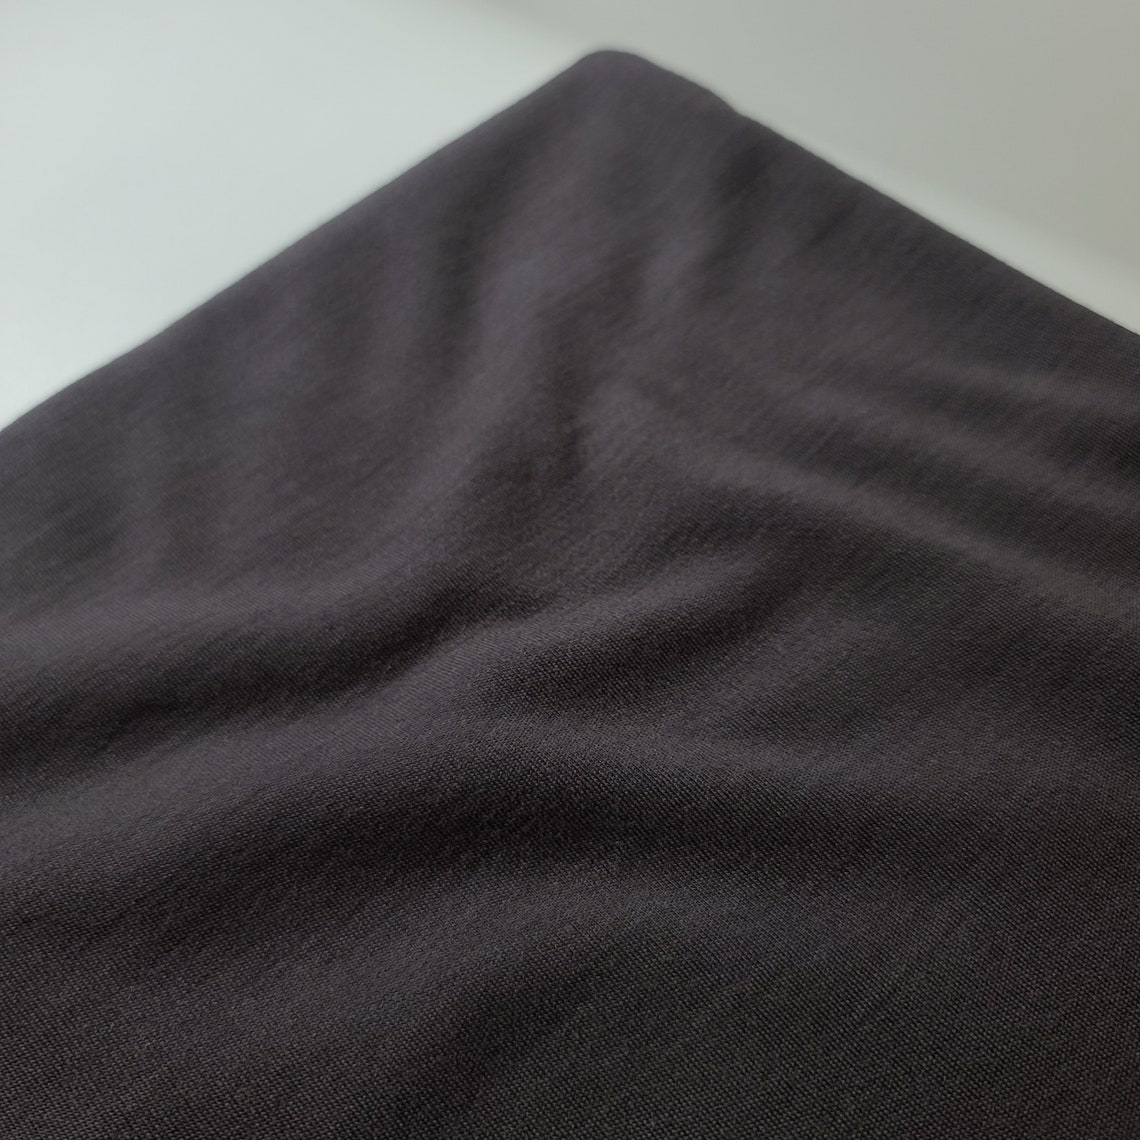 Merino Wool Fabric Quilting Fabric Wool baby blanket | Etsy